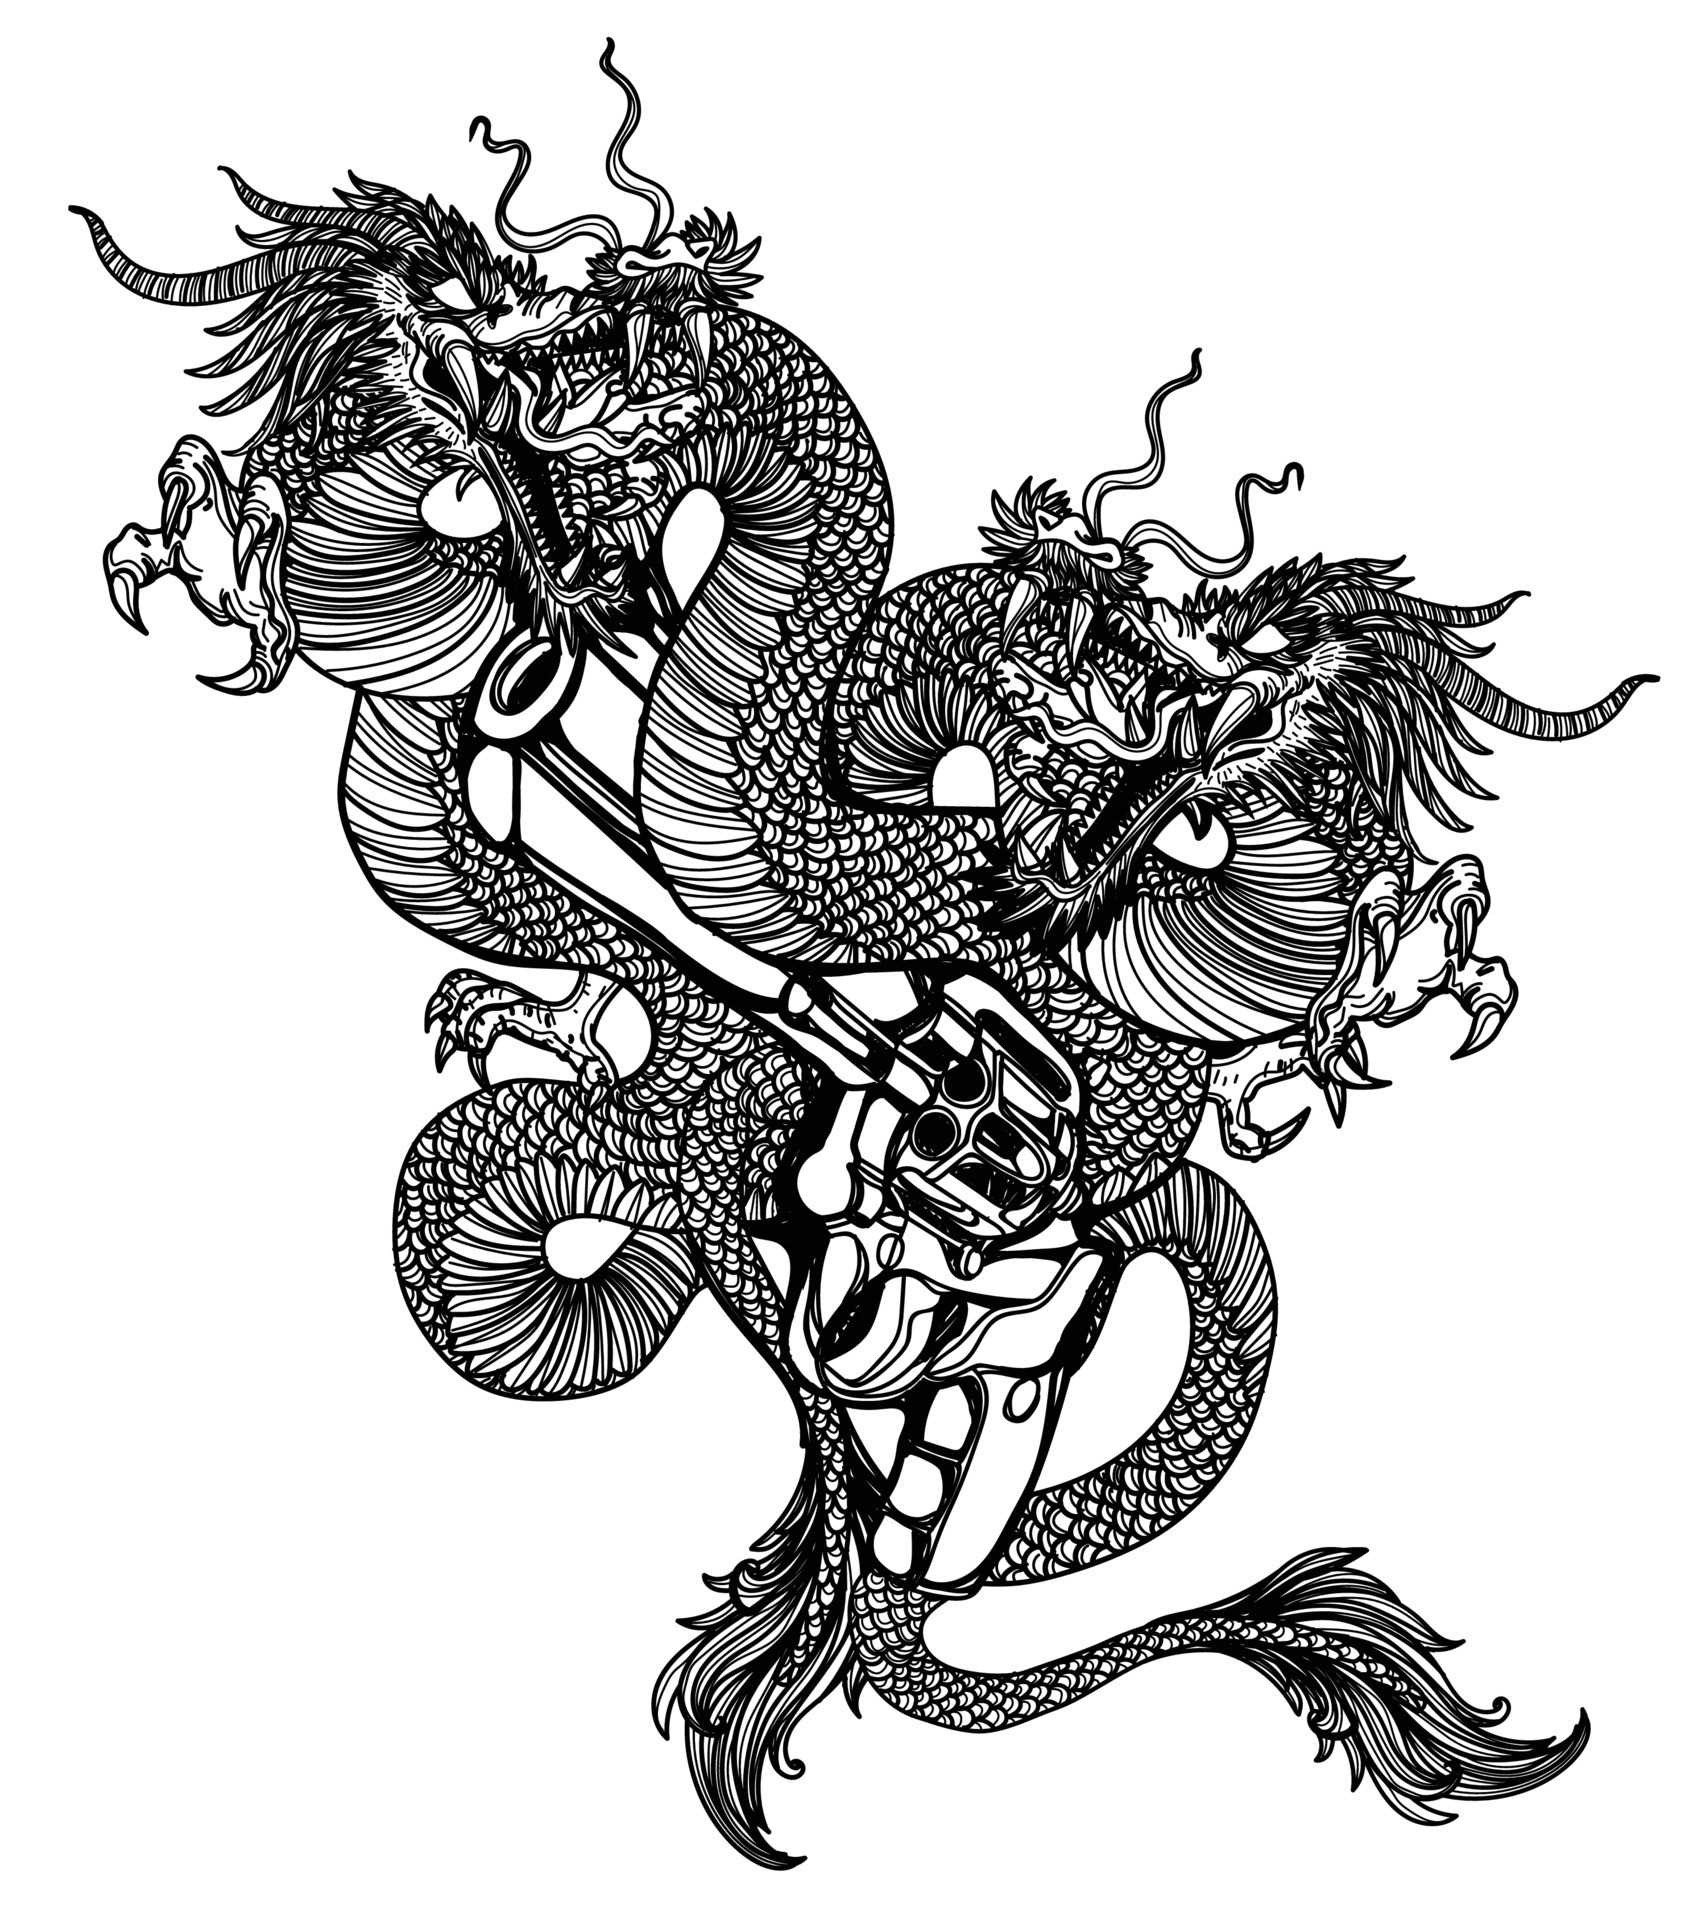 Temporary Dragon Tattoo for sale  eBay